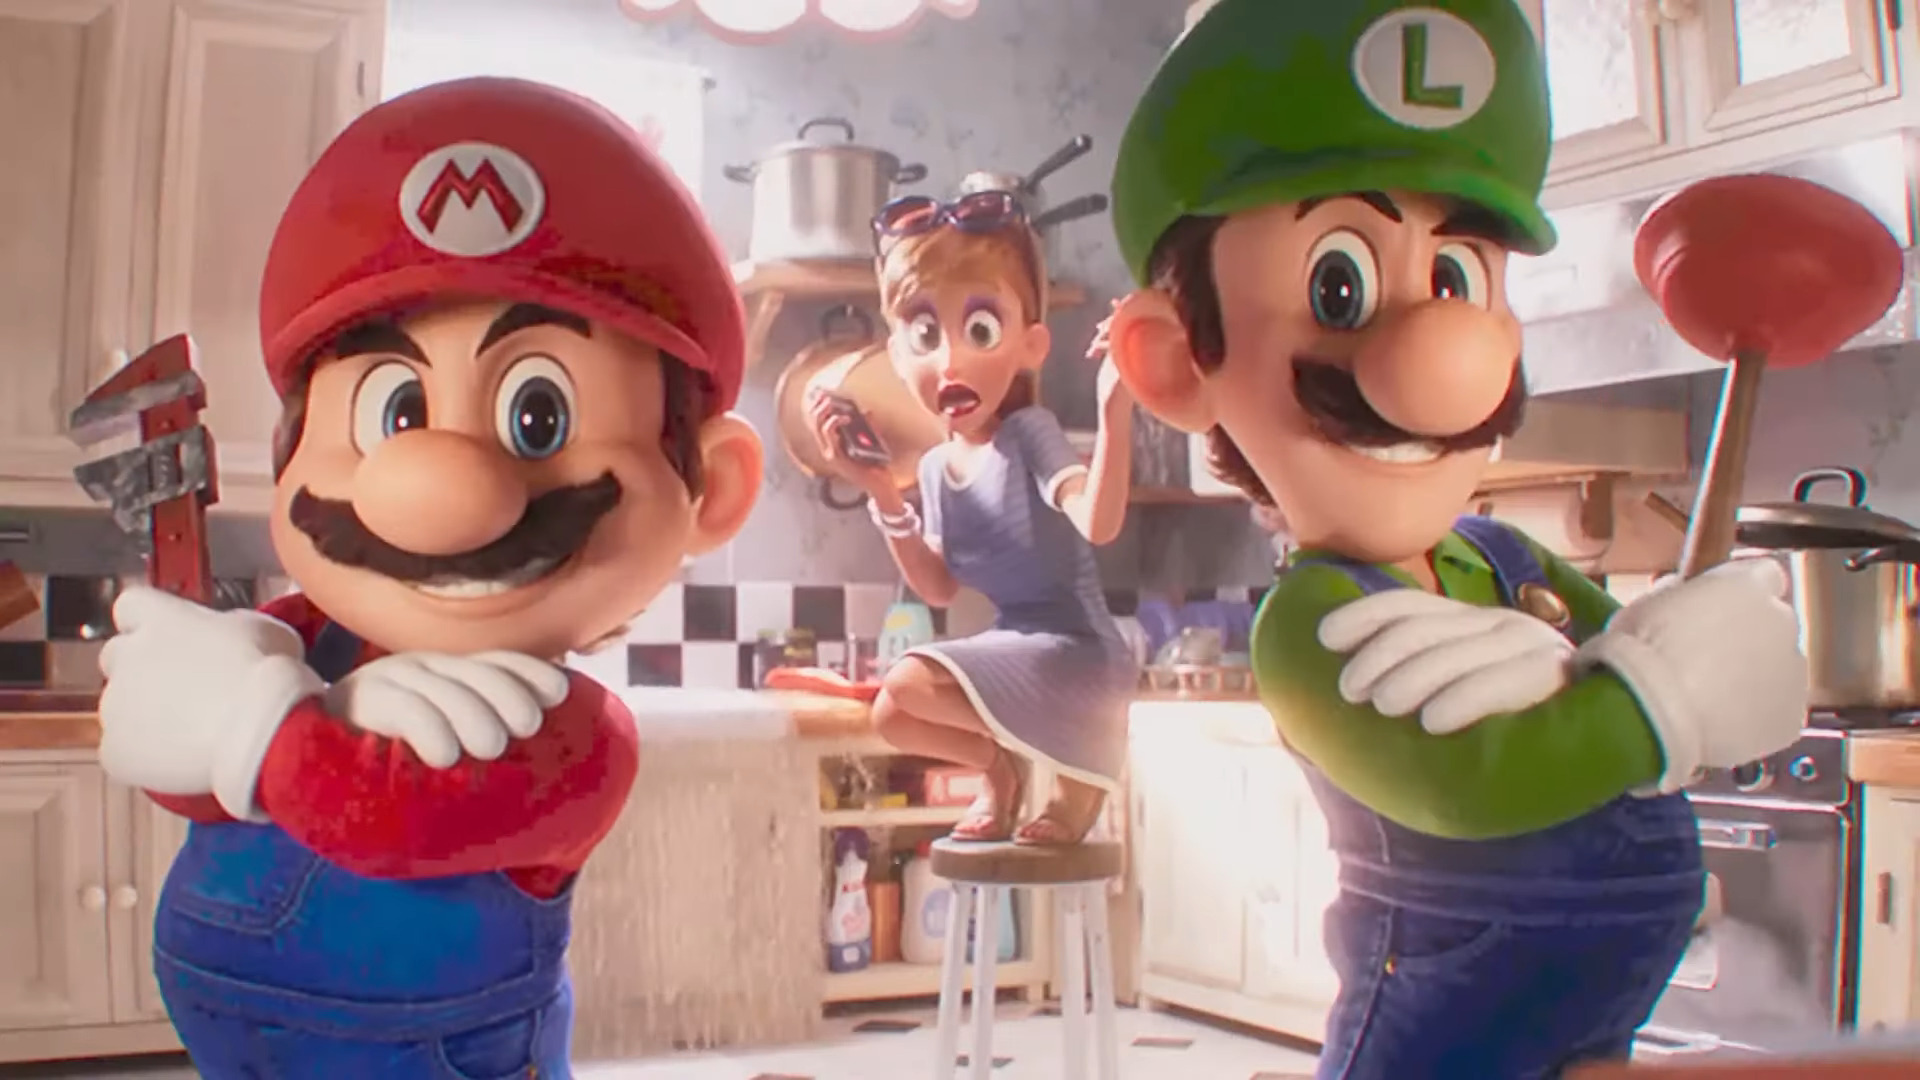  Cult PC gaming icon 'Super Mario' resurrects his '80s rap classic in nostalgic Super Bowl ad 